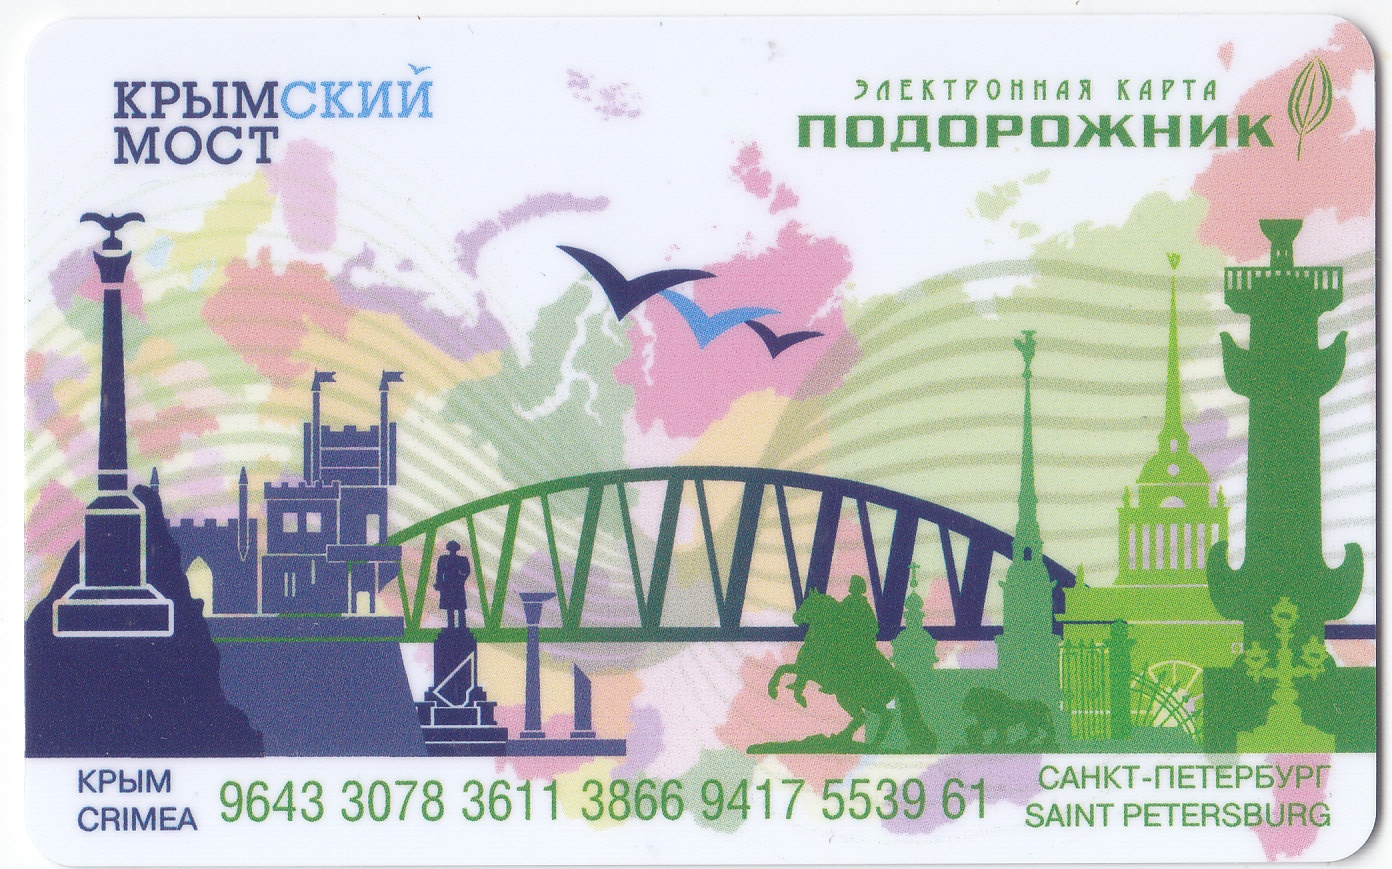 Крымский мост логотип